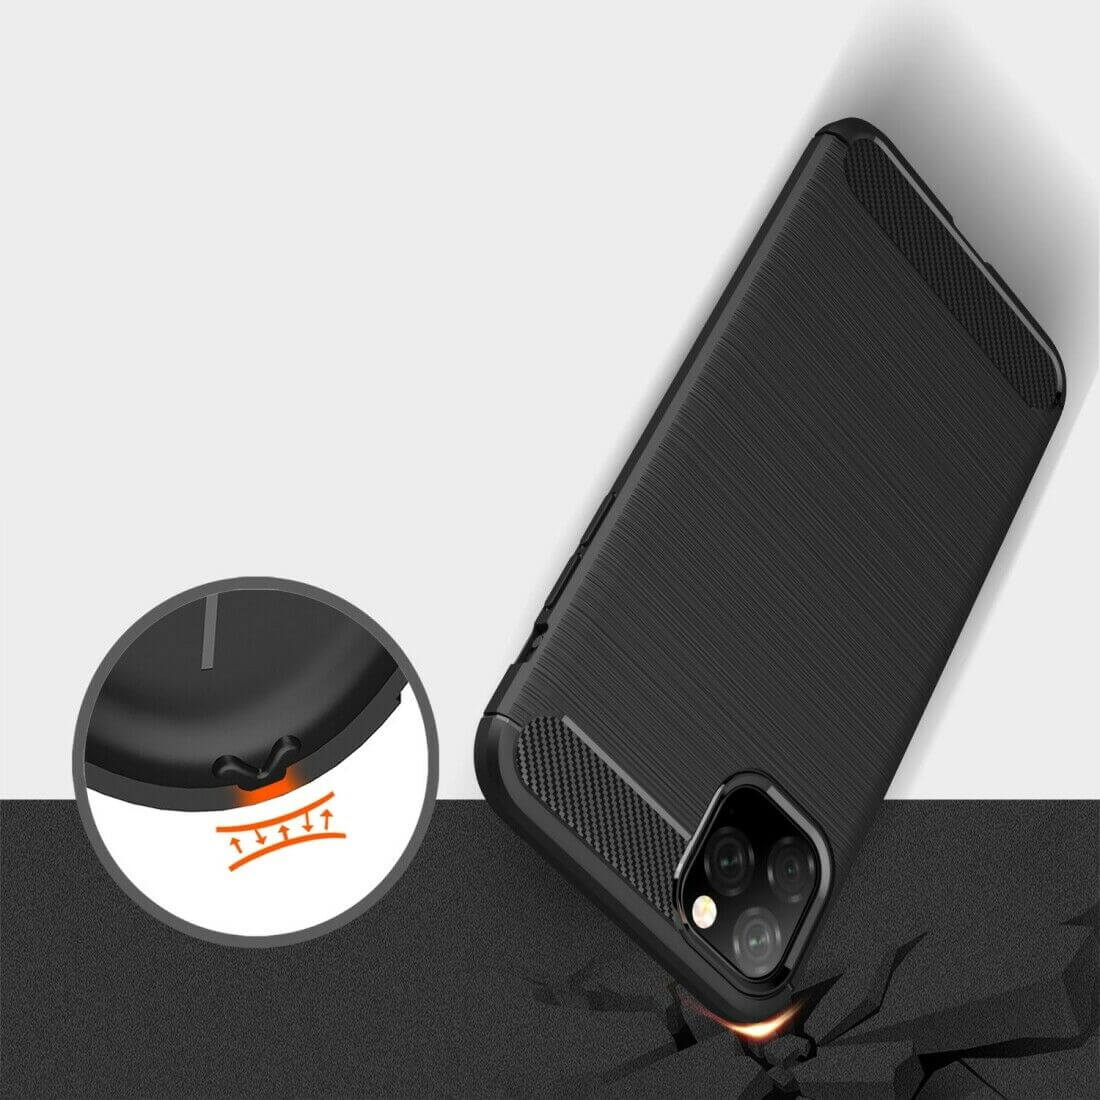 For Apple iPhone 11 Pro Carbon Fibre Design Case TPU Cover - Black